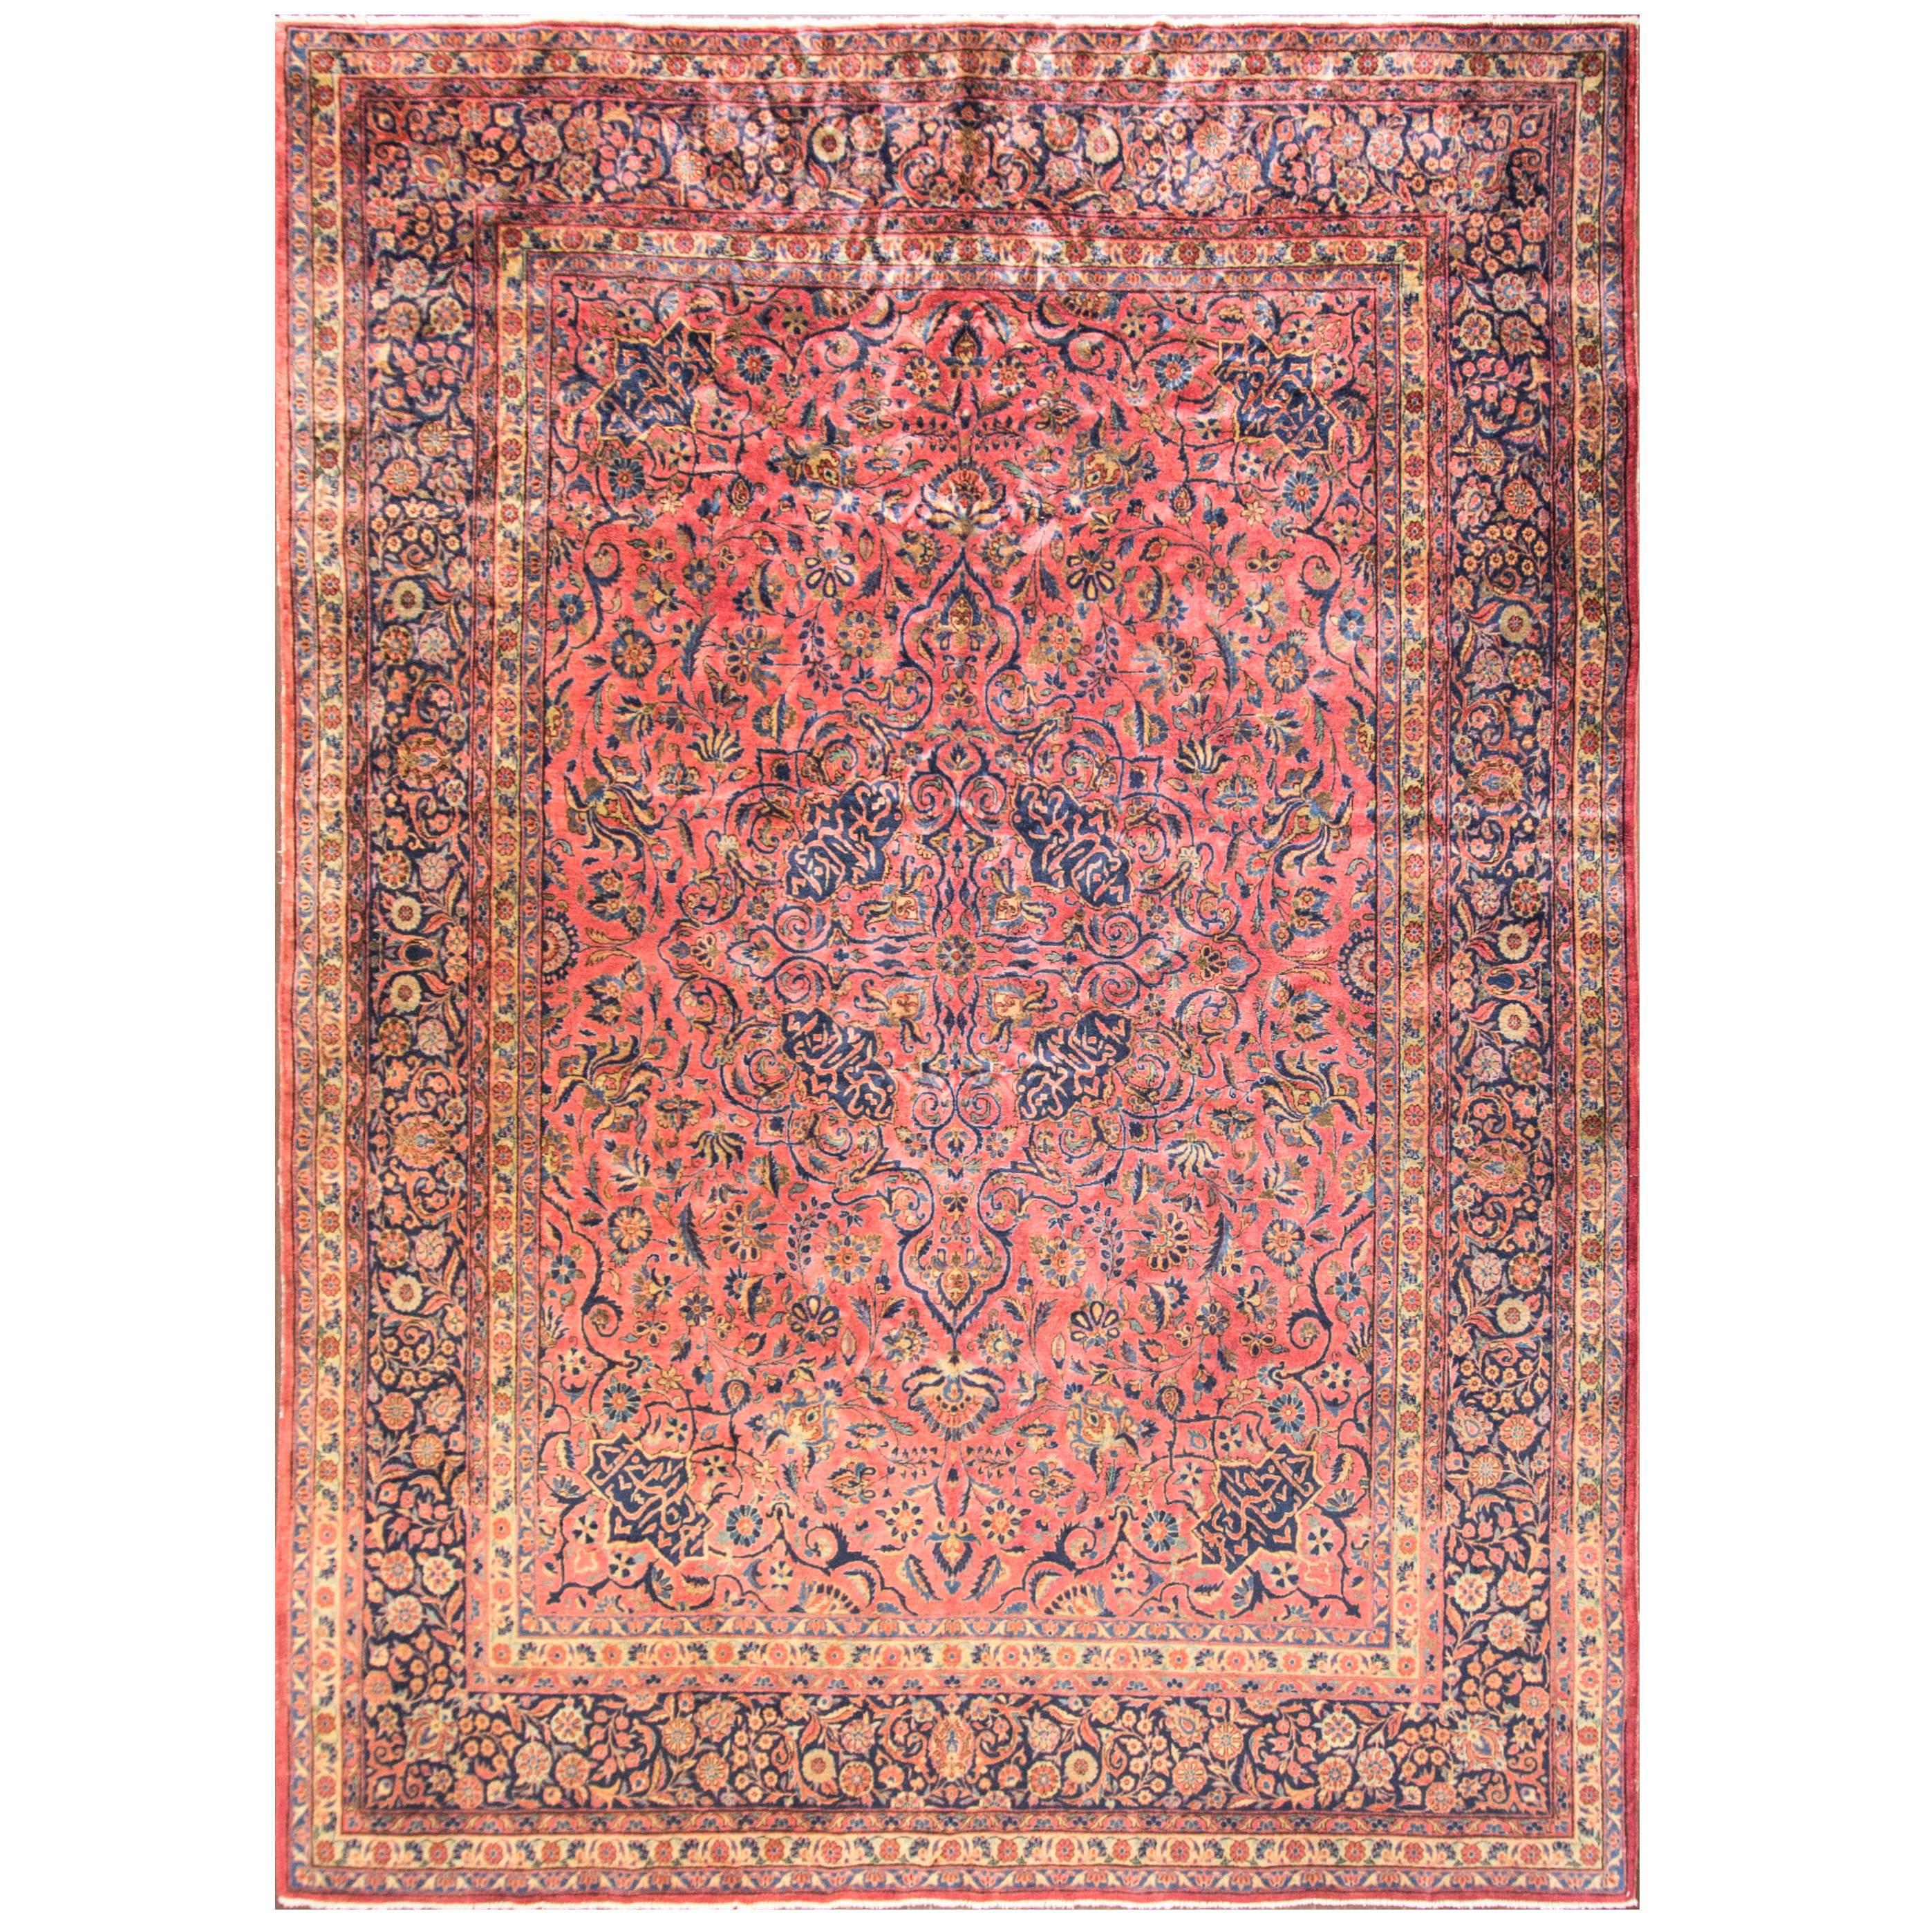  Antique Persian Manchester Kashan Carpet, Signed